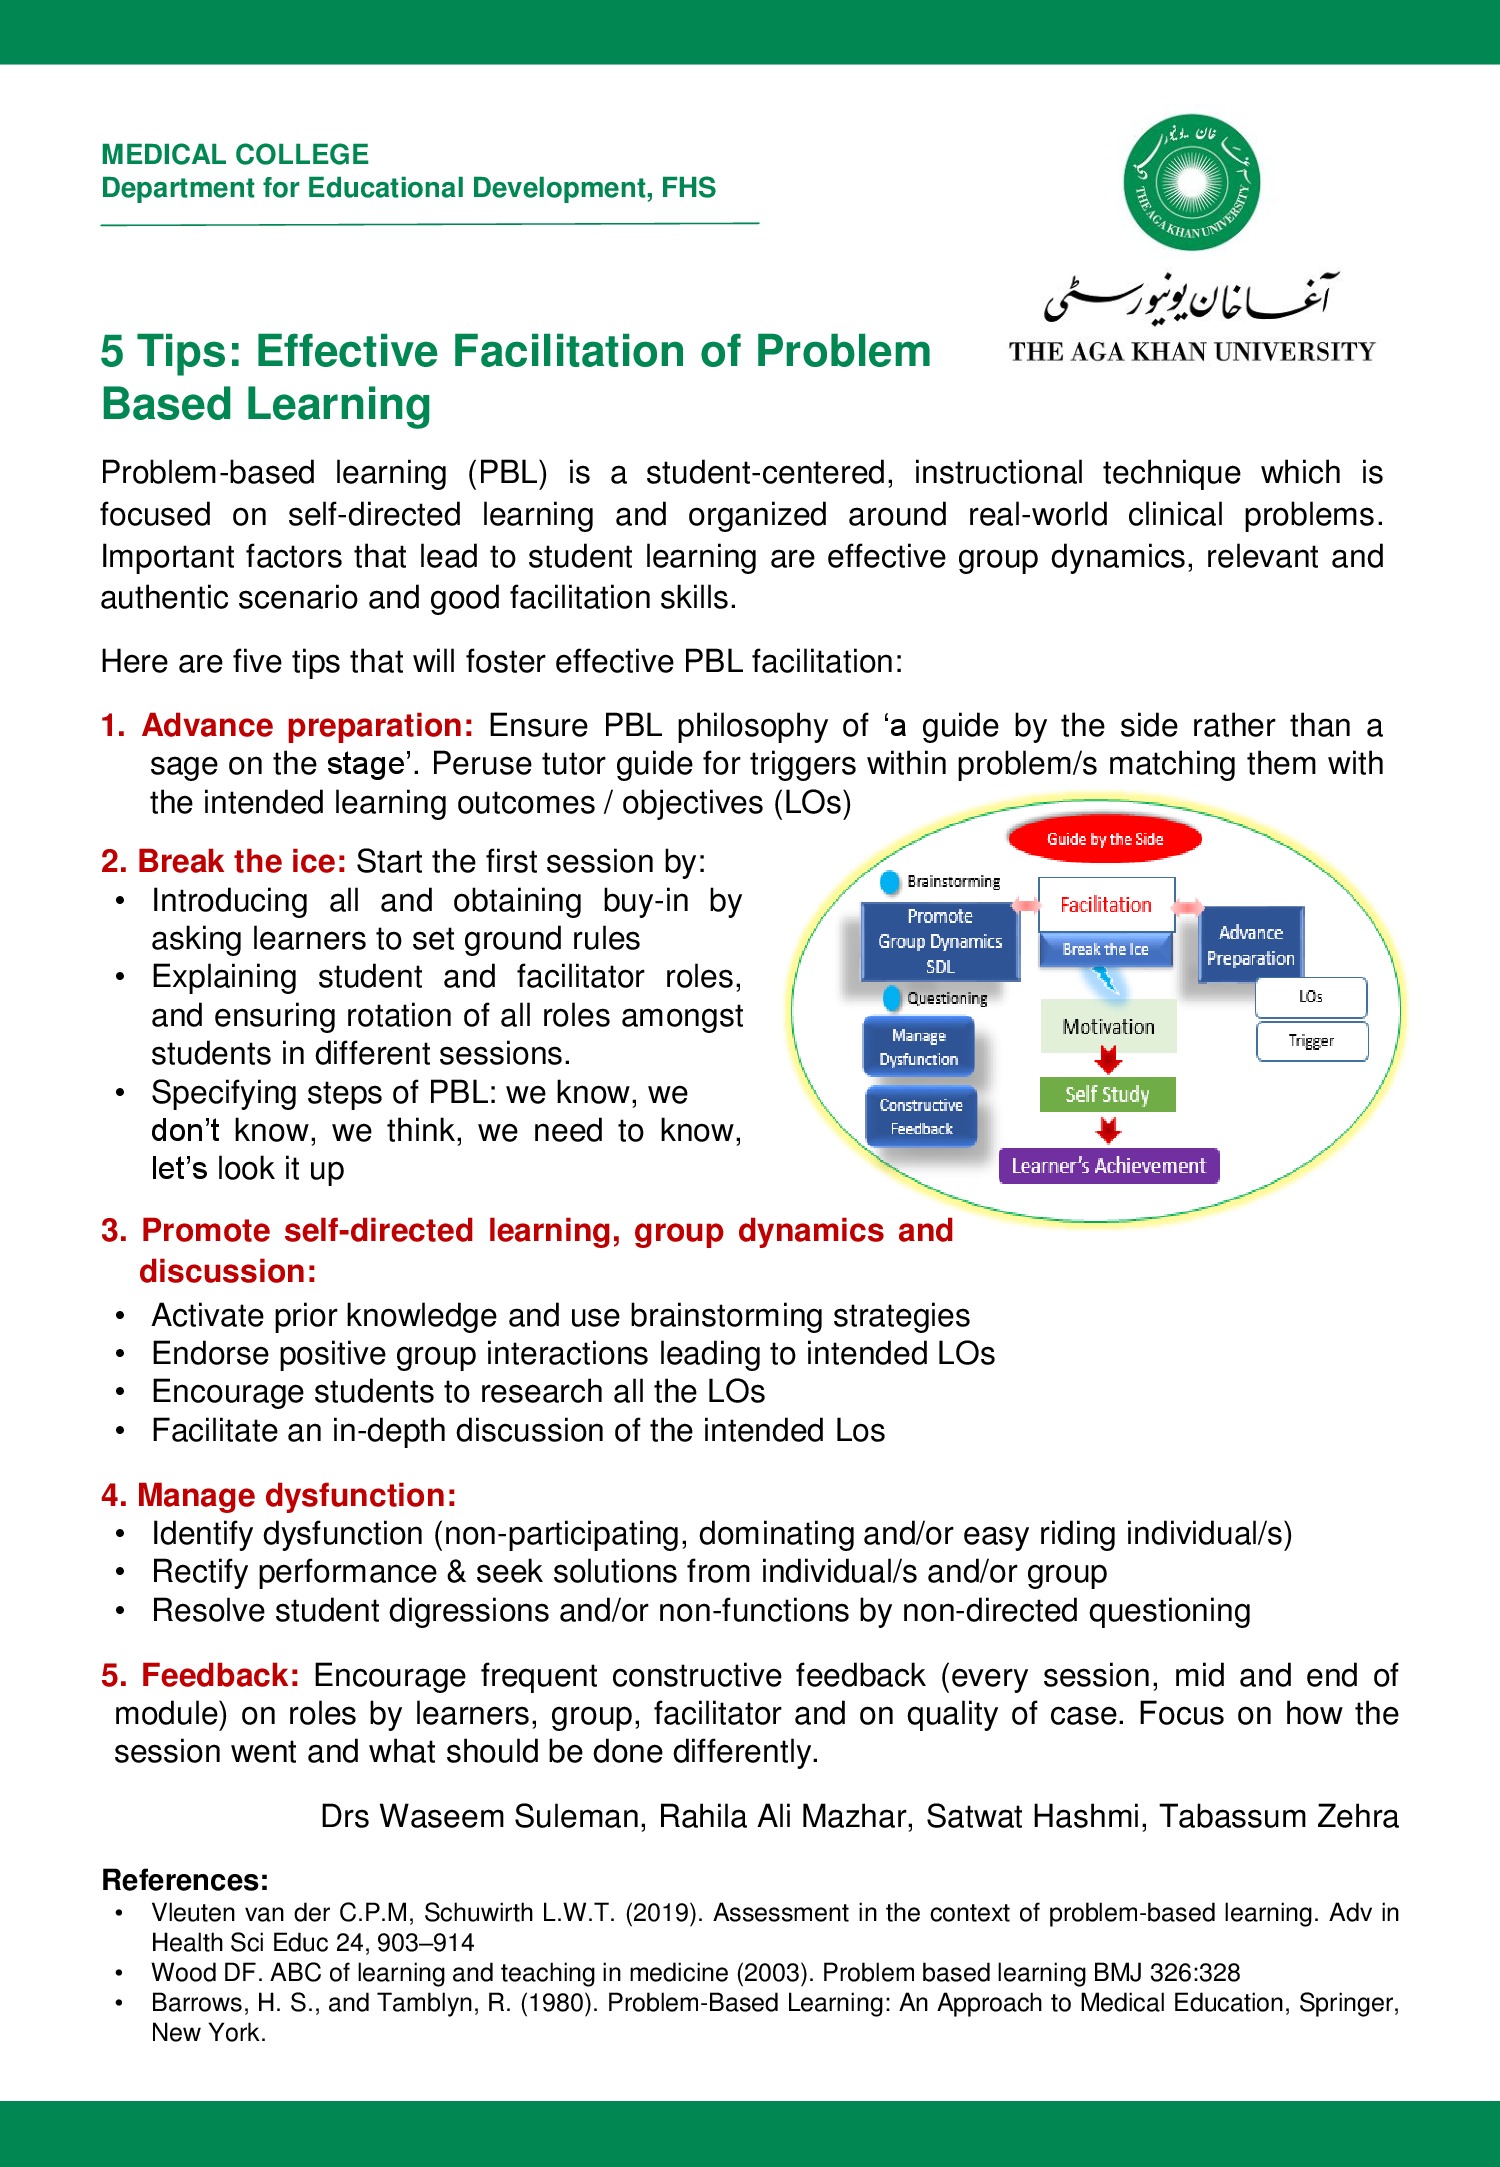 effective facilitation of problem based learning.jpg